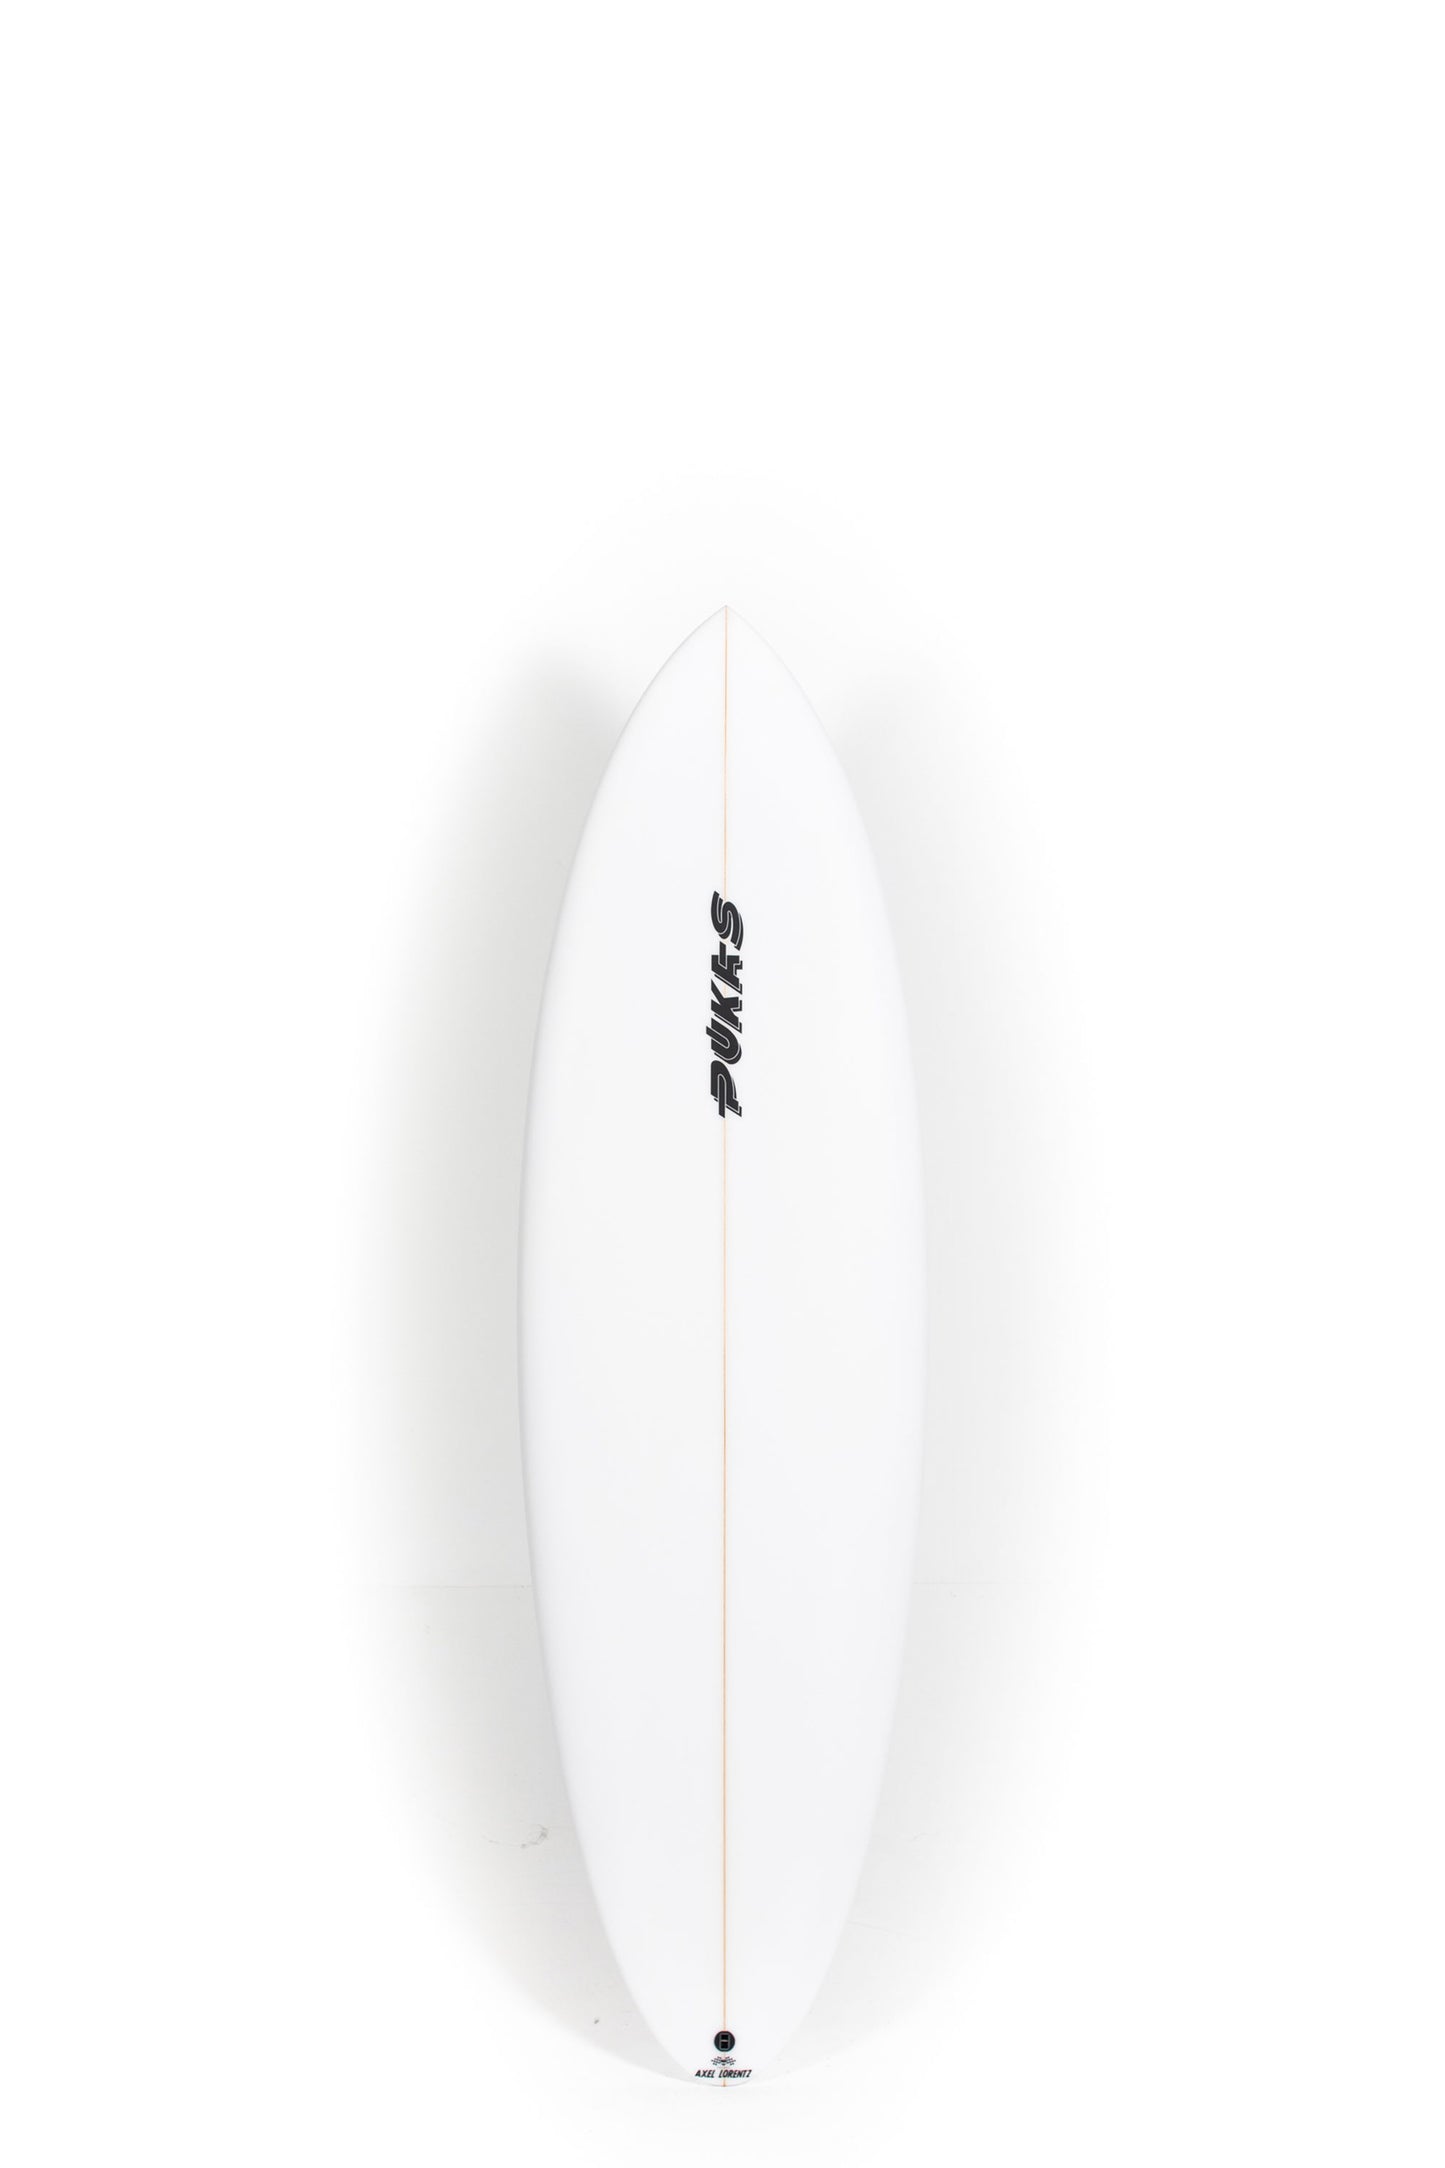 Pukas Surf Shop - Pukas Surfboard - ORIGINAL 69 by Axel Lorentz - 6’4” x 21,50 x 2,88 - 42,69L - AX09871